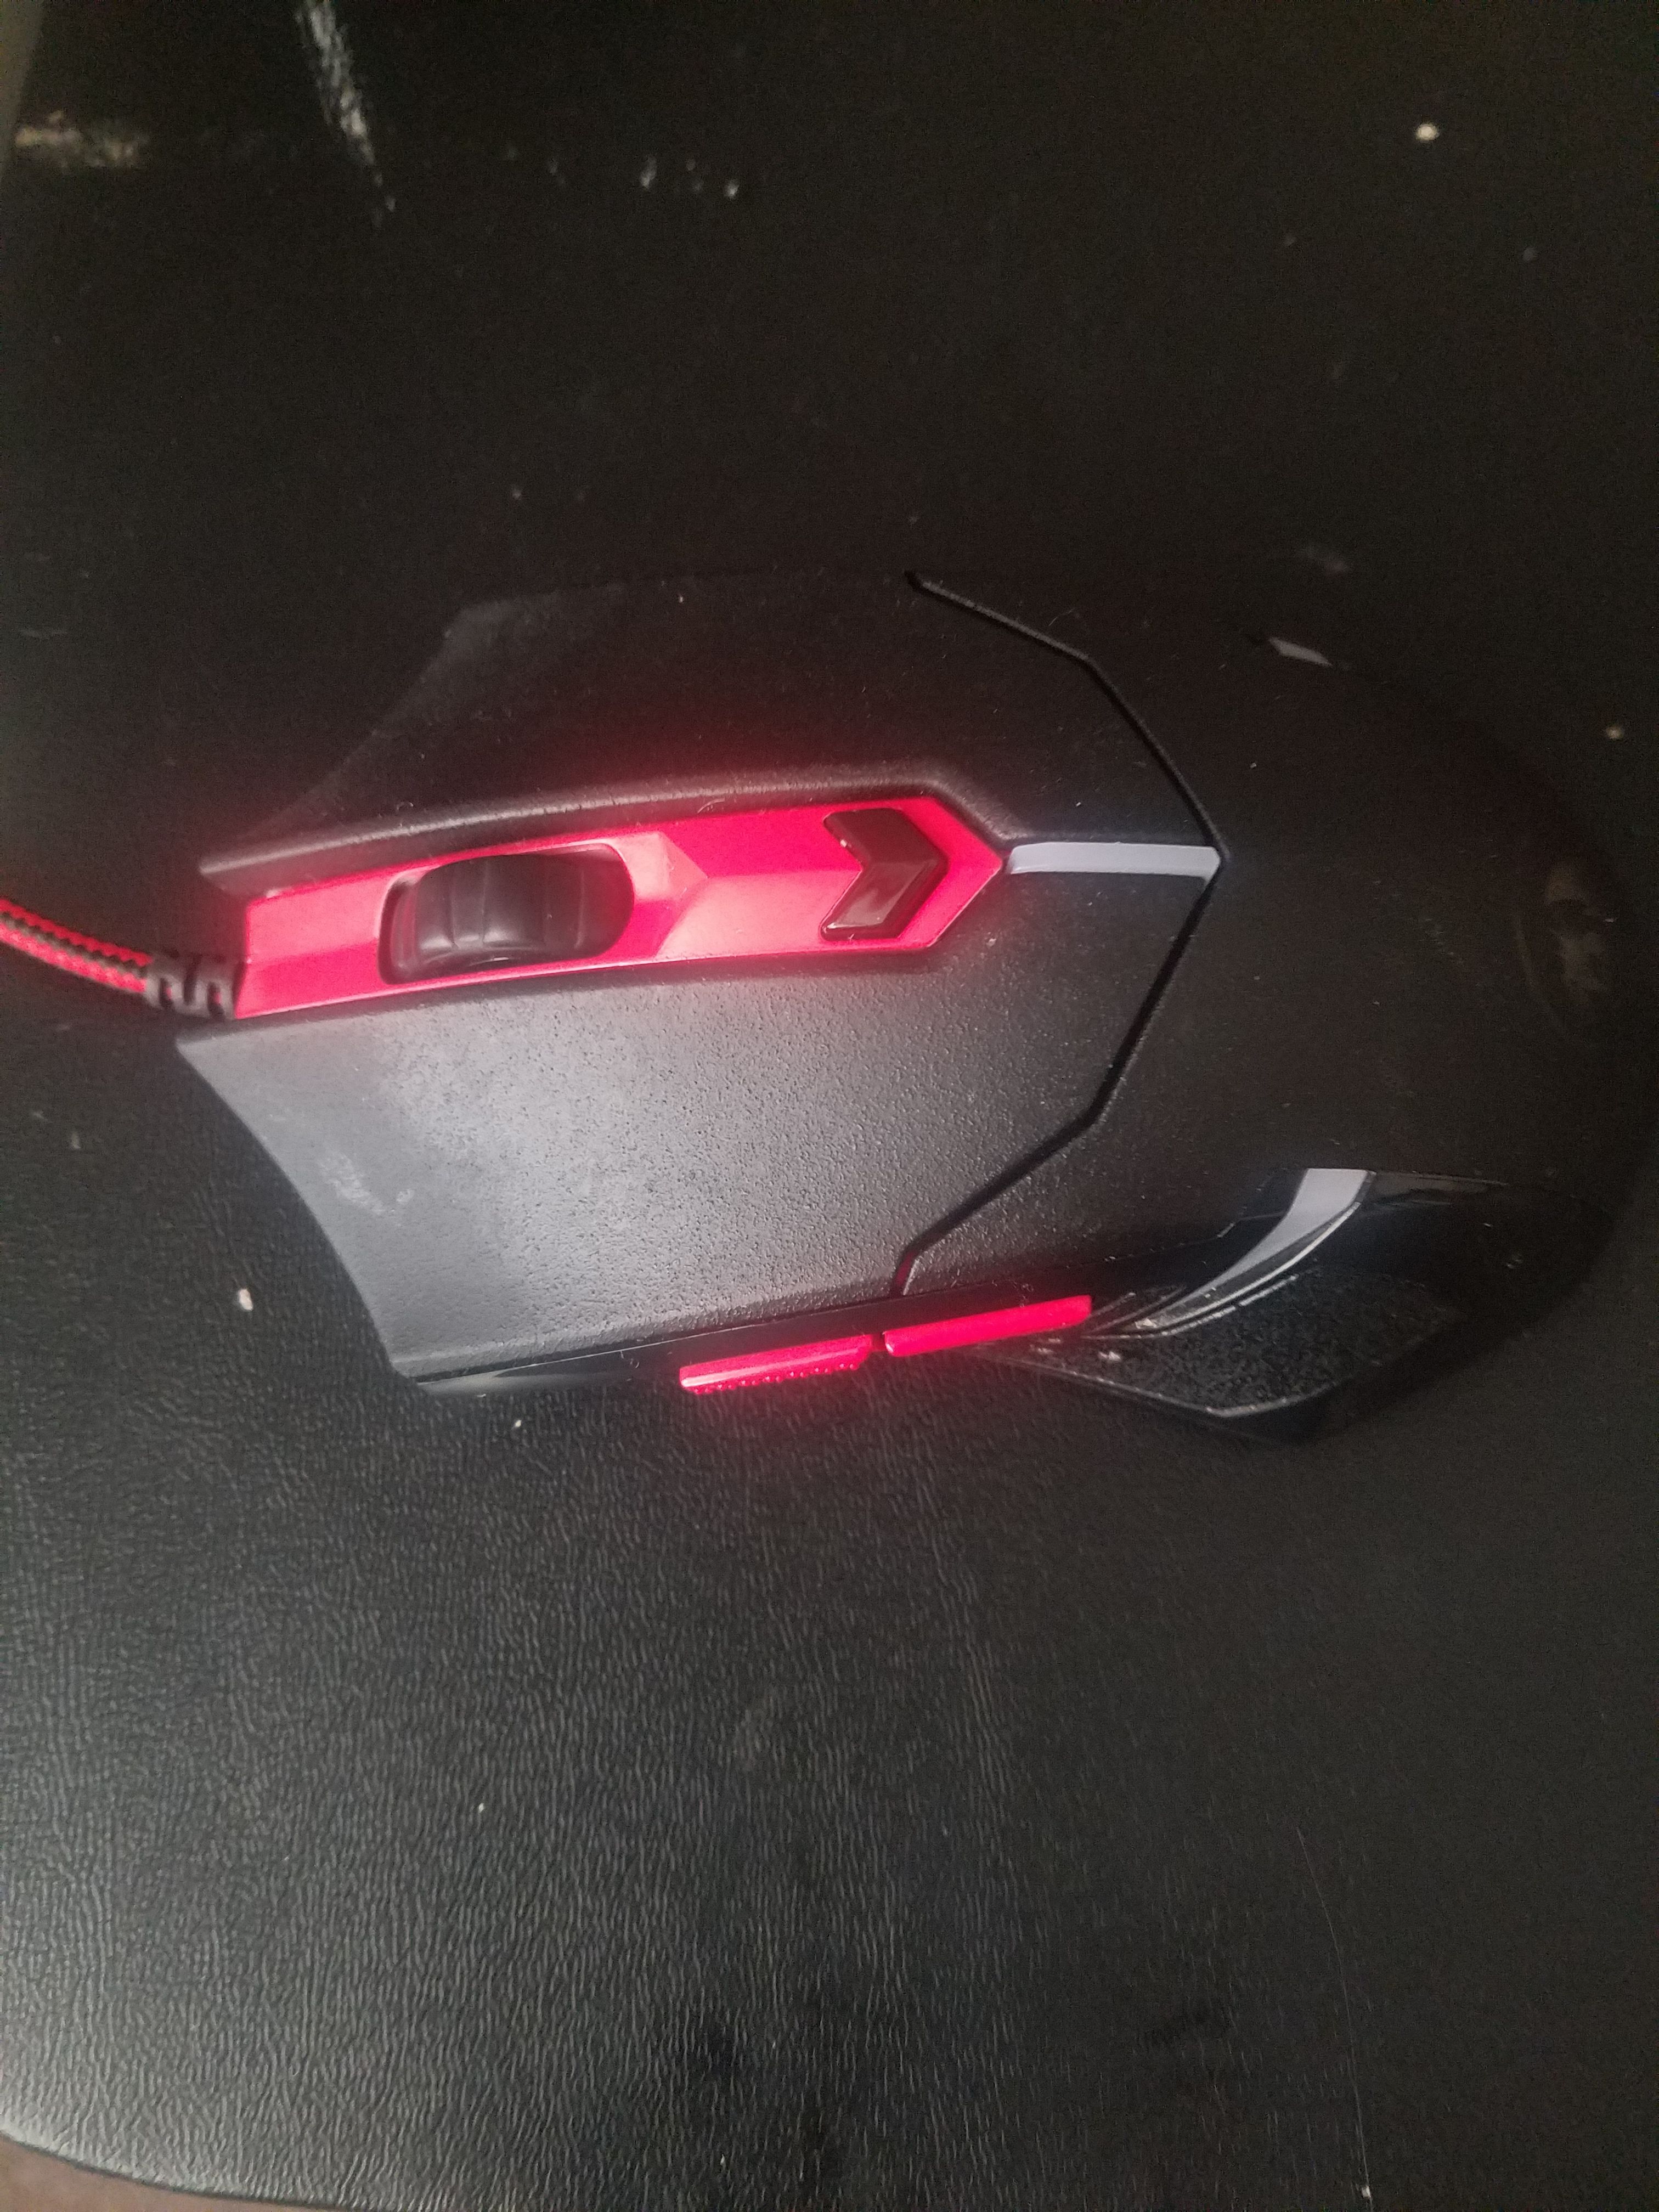 Reddragon Gaming Mouse